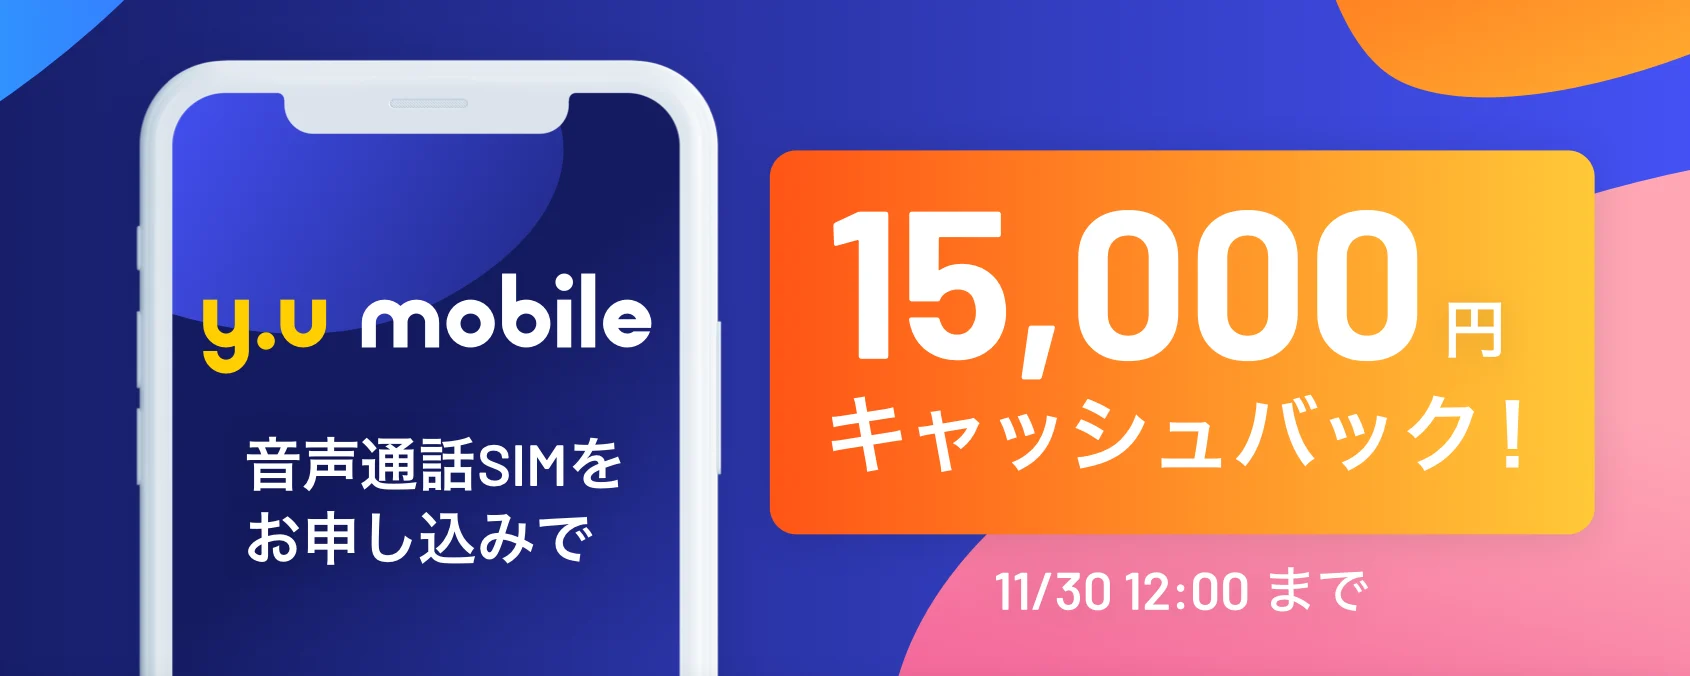 y.u mobile15,000円キャッシュバックキャンペーン